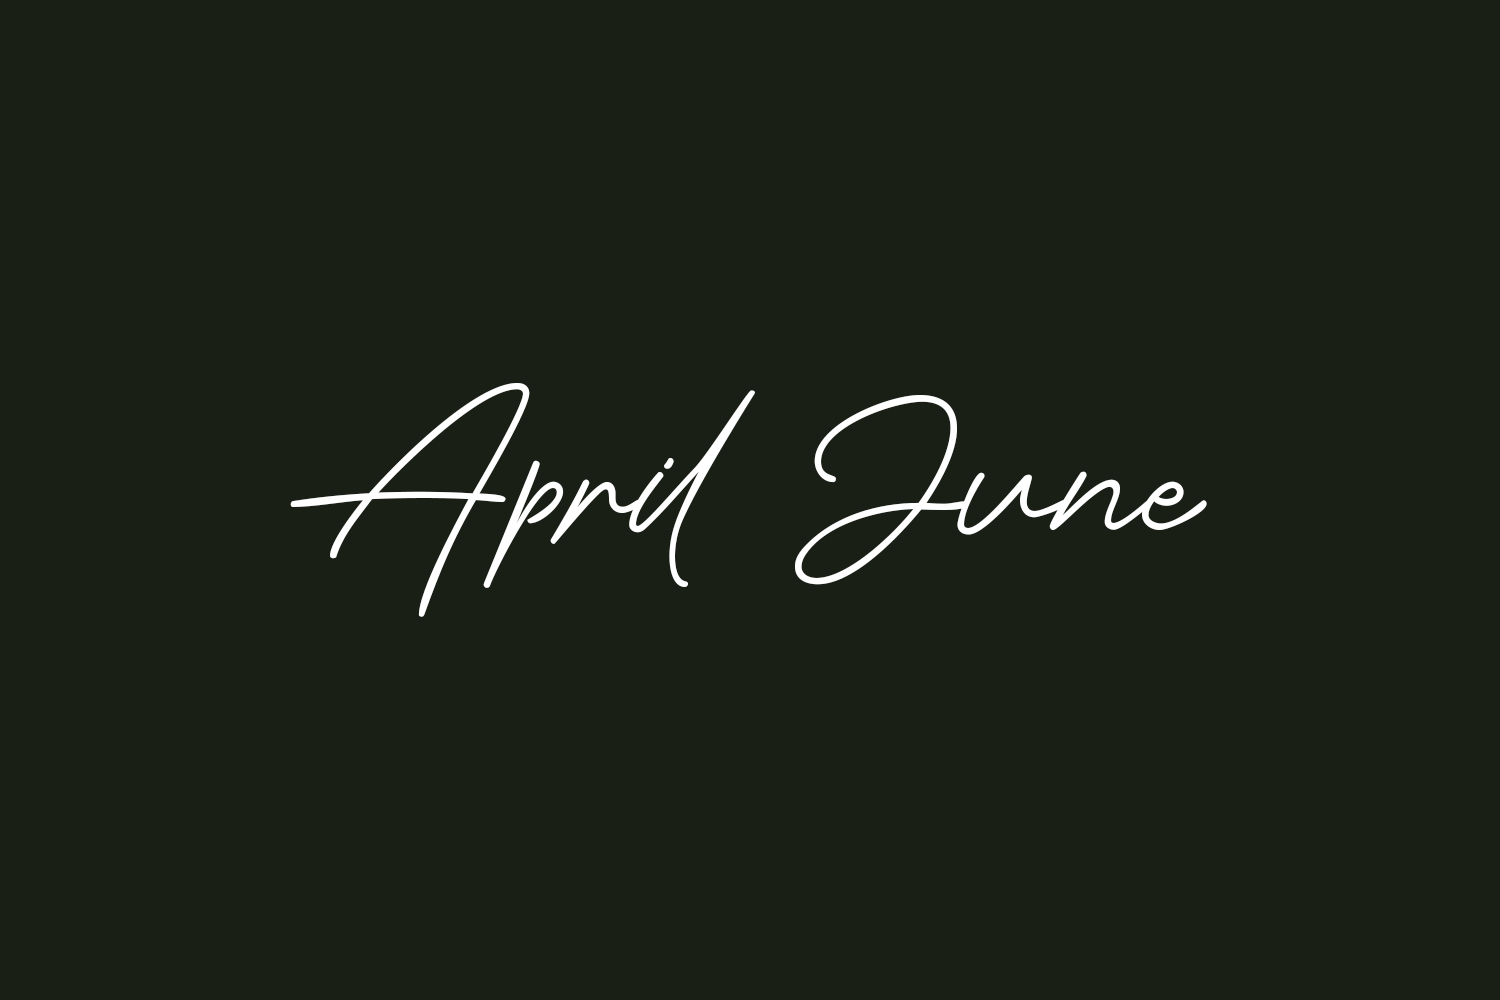 April June Free Font